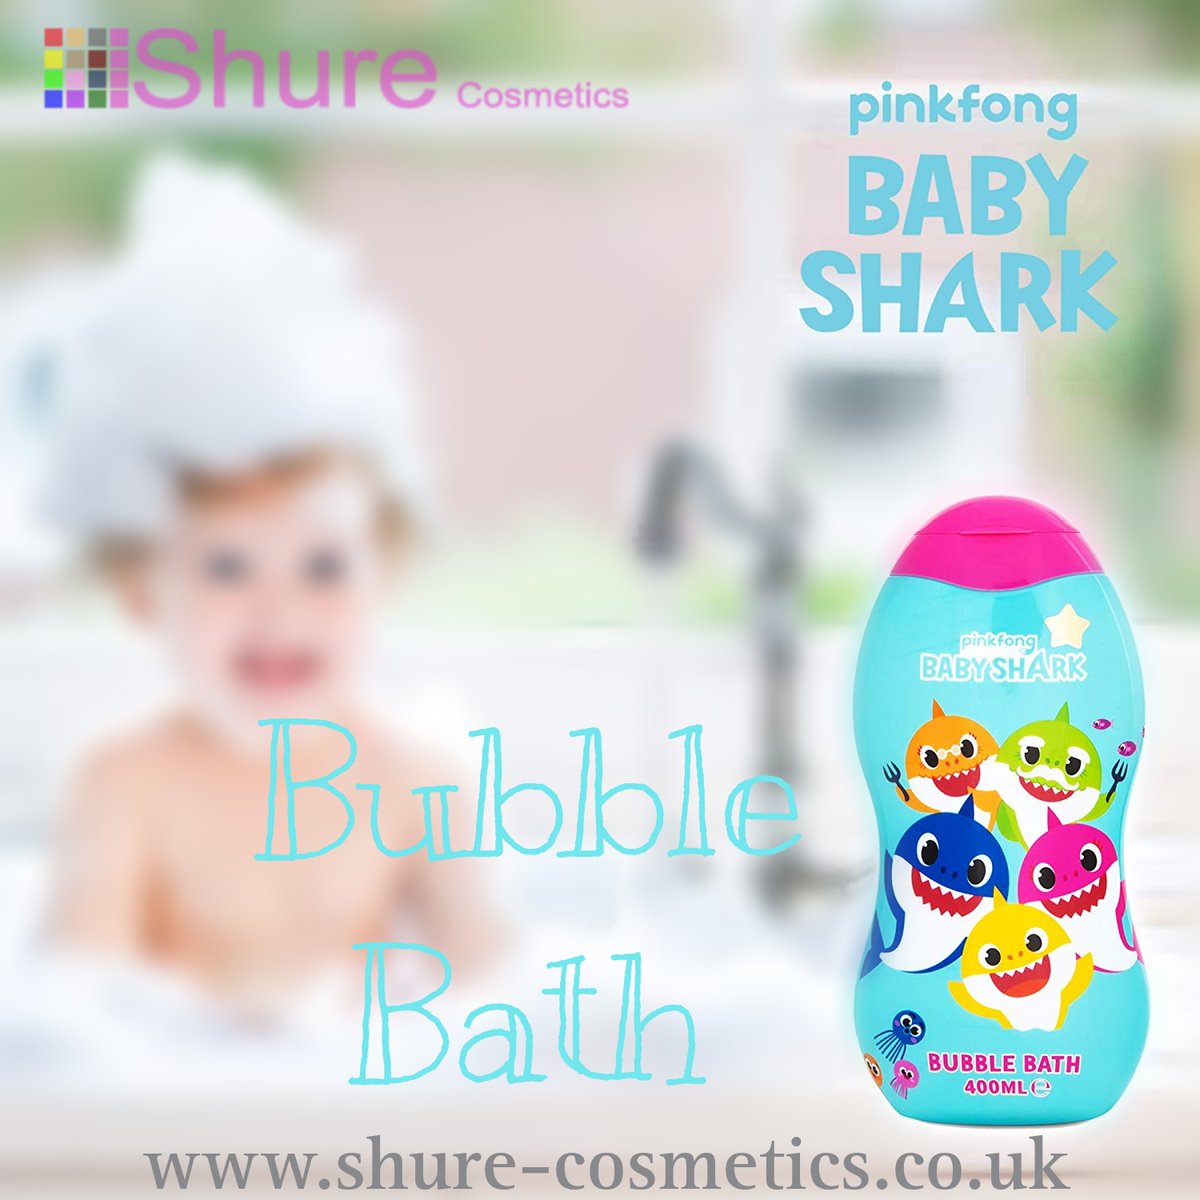 🎁New Arrival...🛀 Baby Shark Bubble Bath - 400ml
For More on Our Website: shure-cosmetics.co.uk/baby-shark/
#babybathing #babybathtime #babybath #babybathtub #baby #bathtime #babybather #babybathroom #bathtimebaby #babybaths #babybathtoys #babybathessentials #babyshowergiftideas #babybath